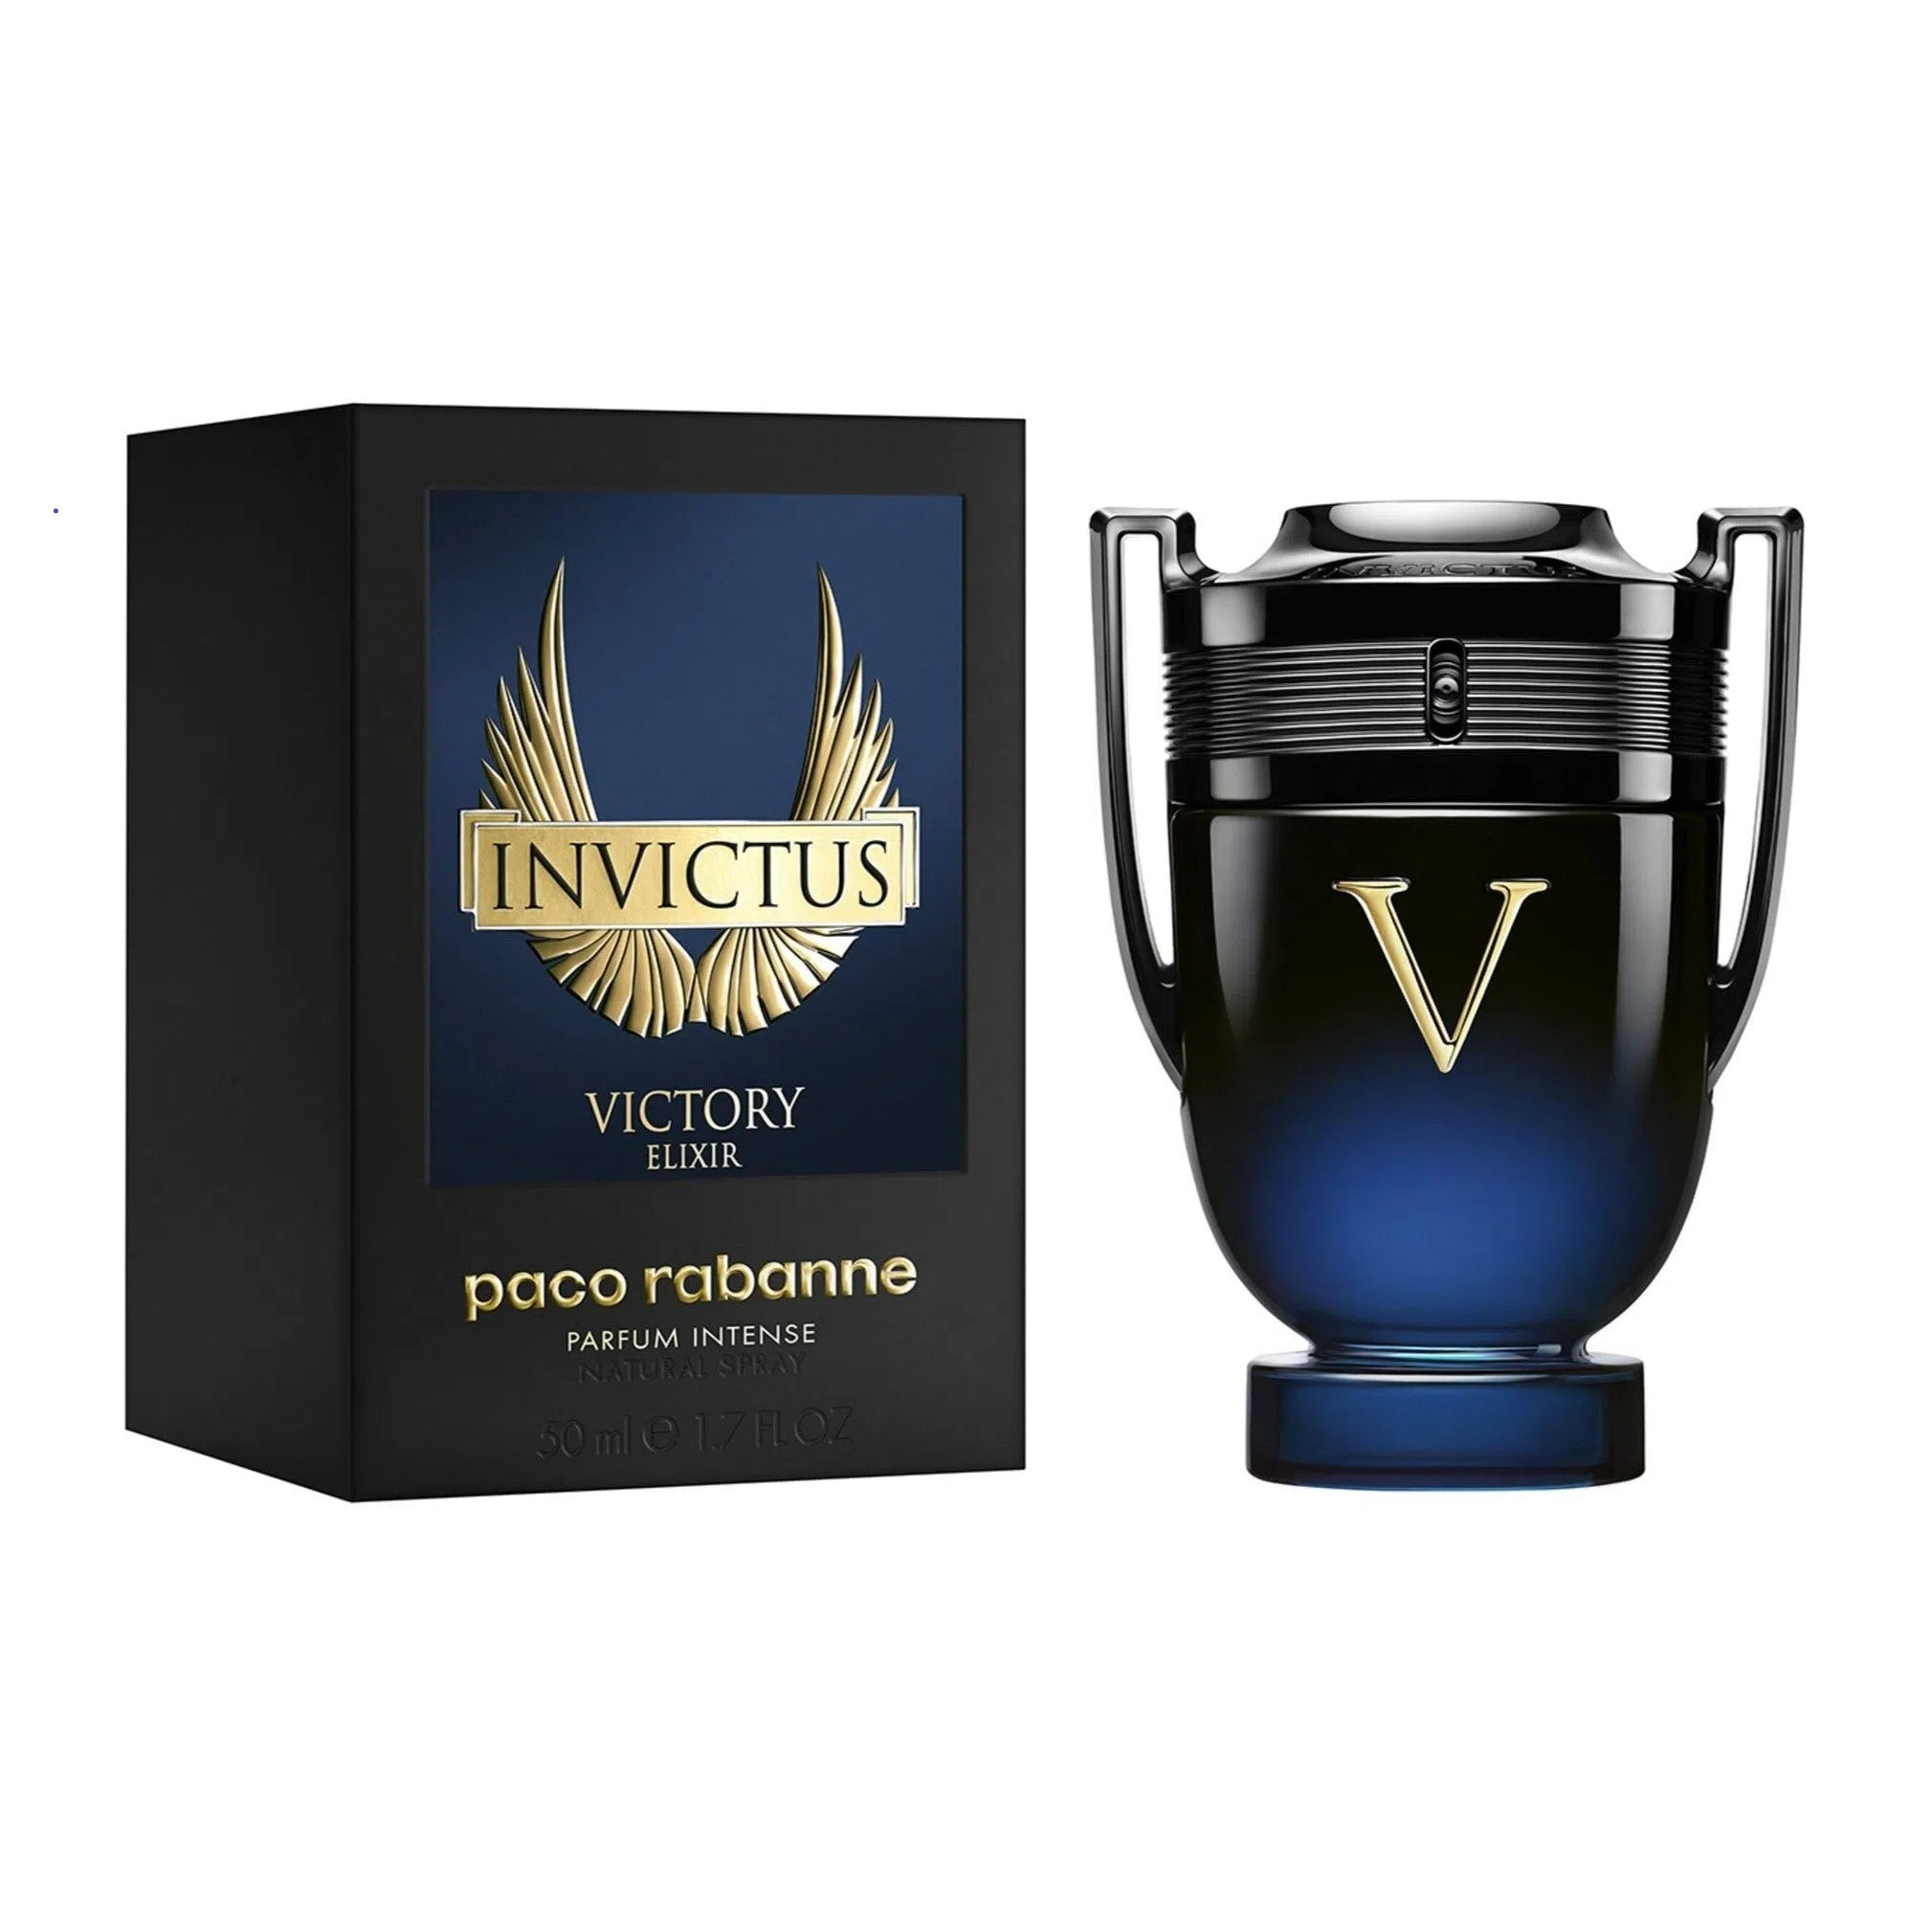 Perfume Paco Rabanne Invictus Victory Elixir Parfum (M) / 50 ml - 3349668614516- Prive Perfumes Honduras